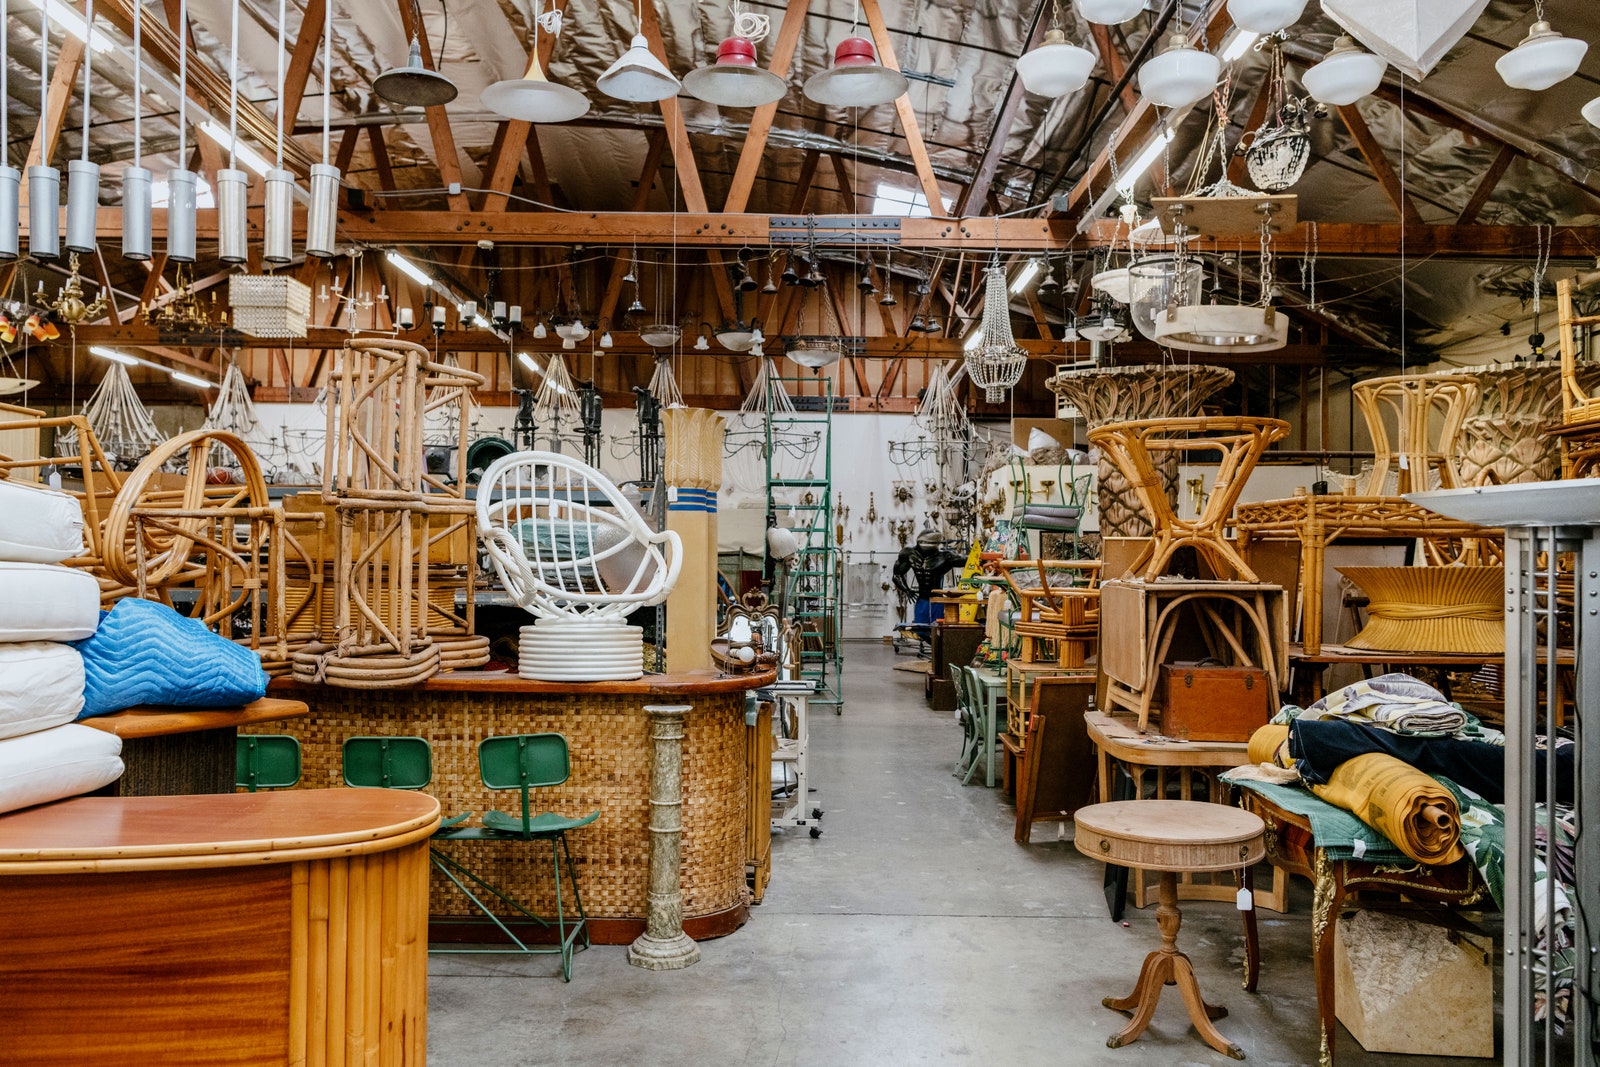 Tropical Sun Rattan Company in Van Nuys, CA has the best vintage rattan